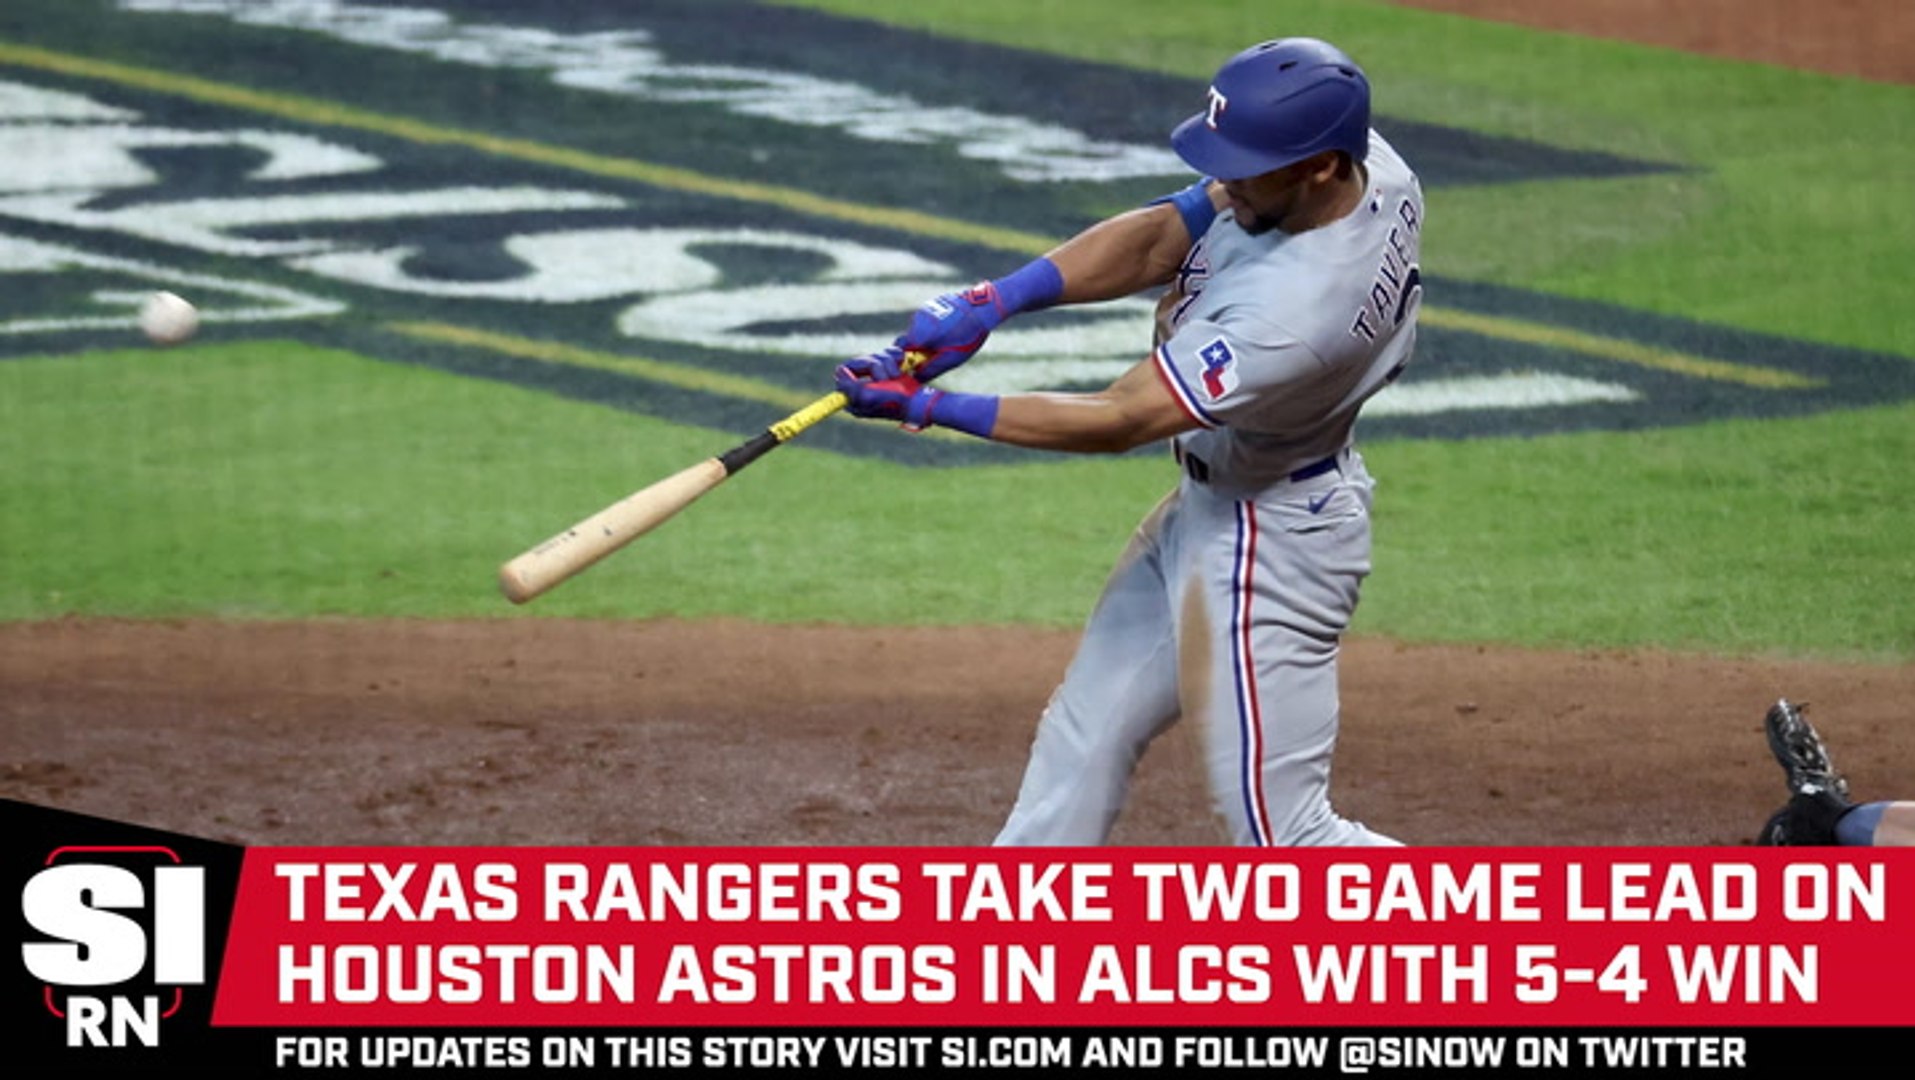 ALCS Playoff Preview: Texas Rangers vs. Houston Astros